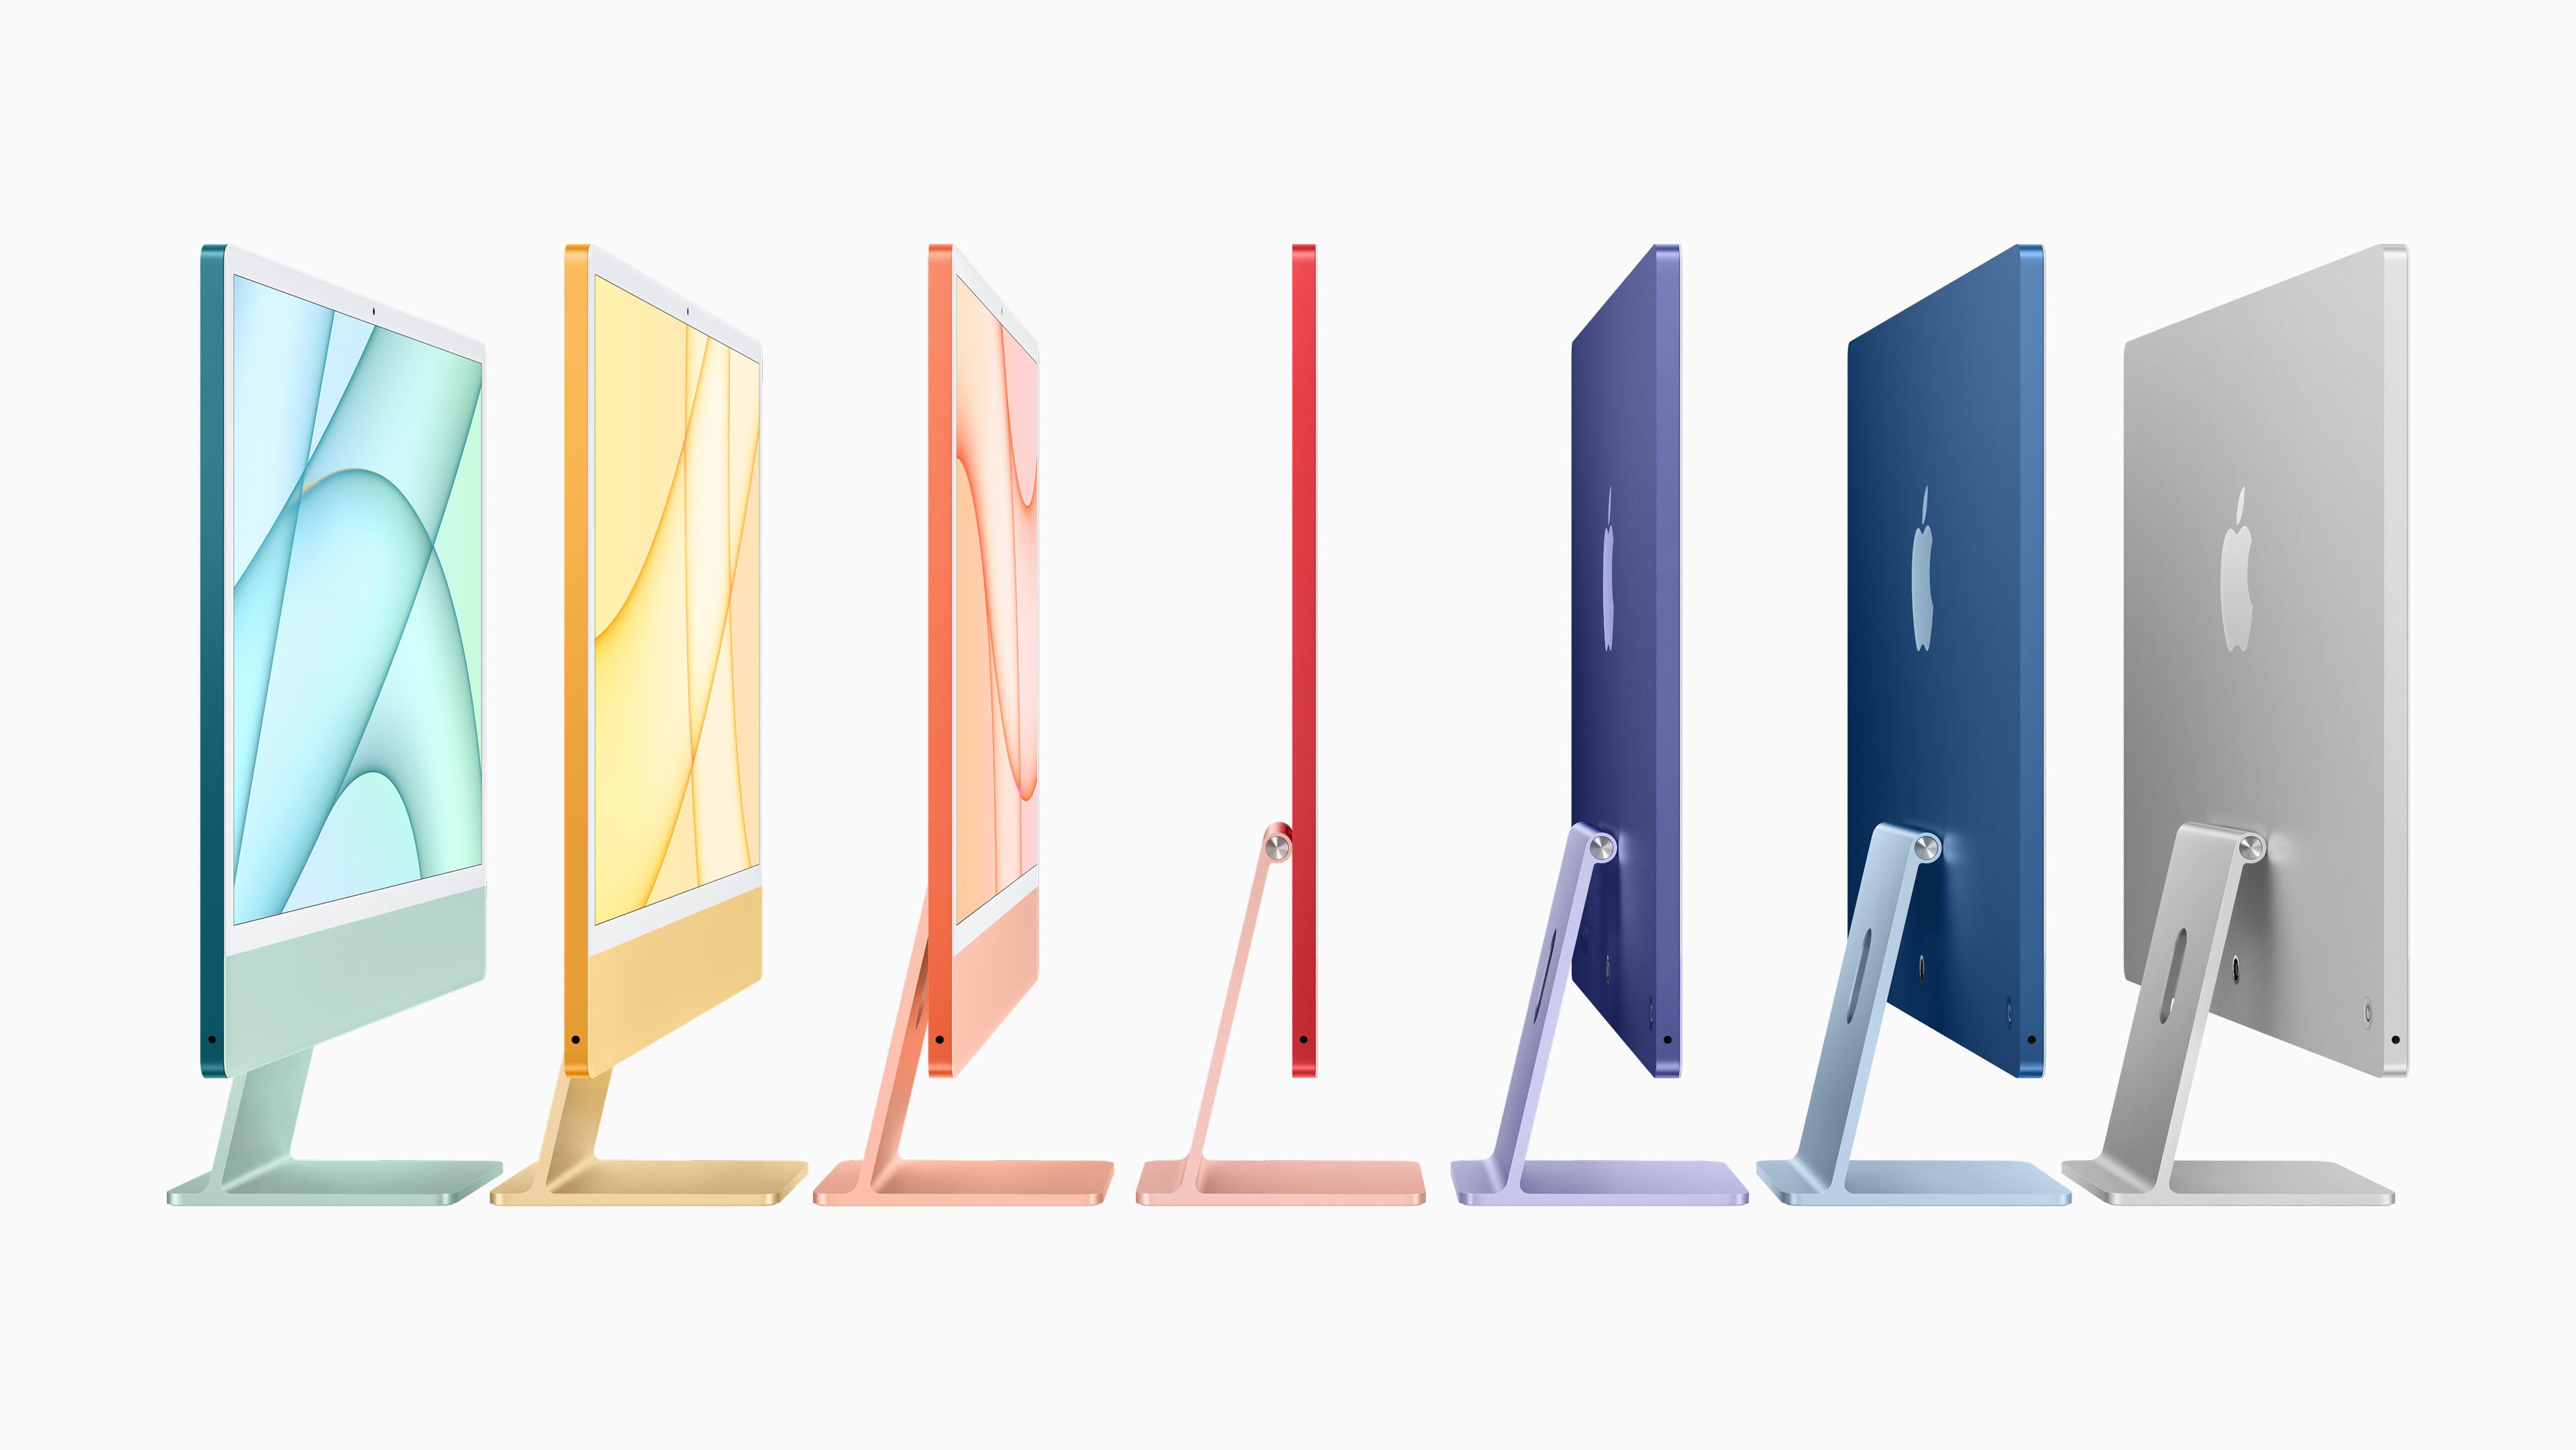 M1 iMac Colors: Deciding on the Right Color - MacRumors